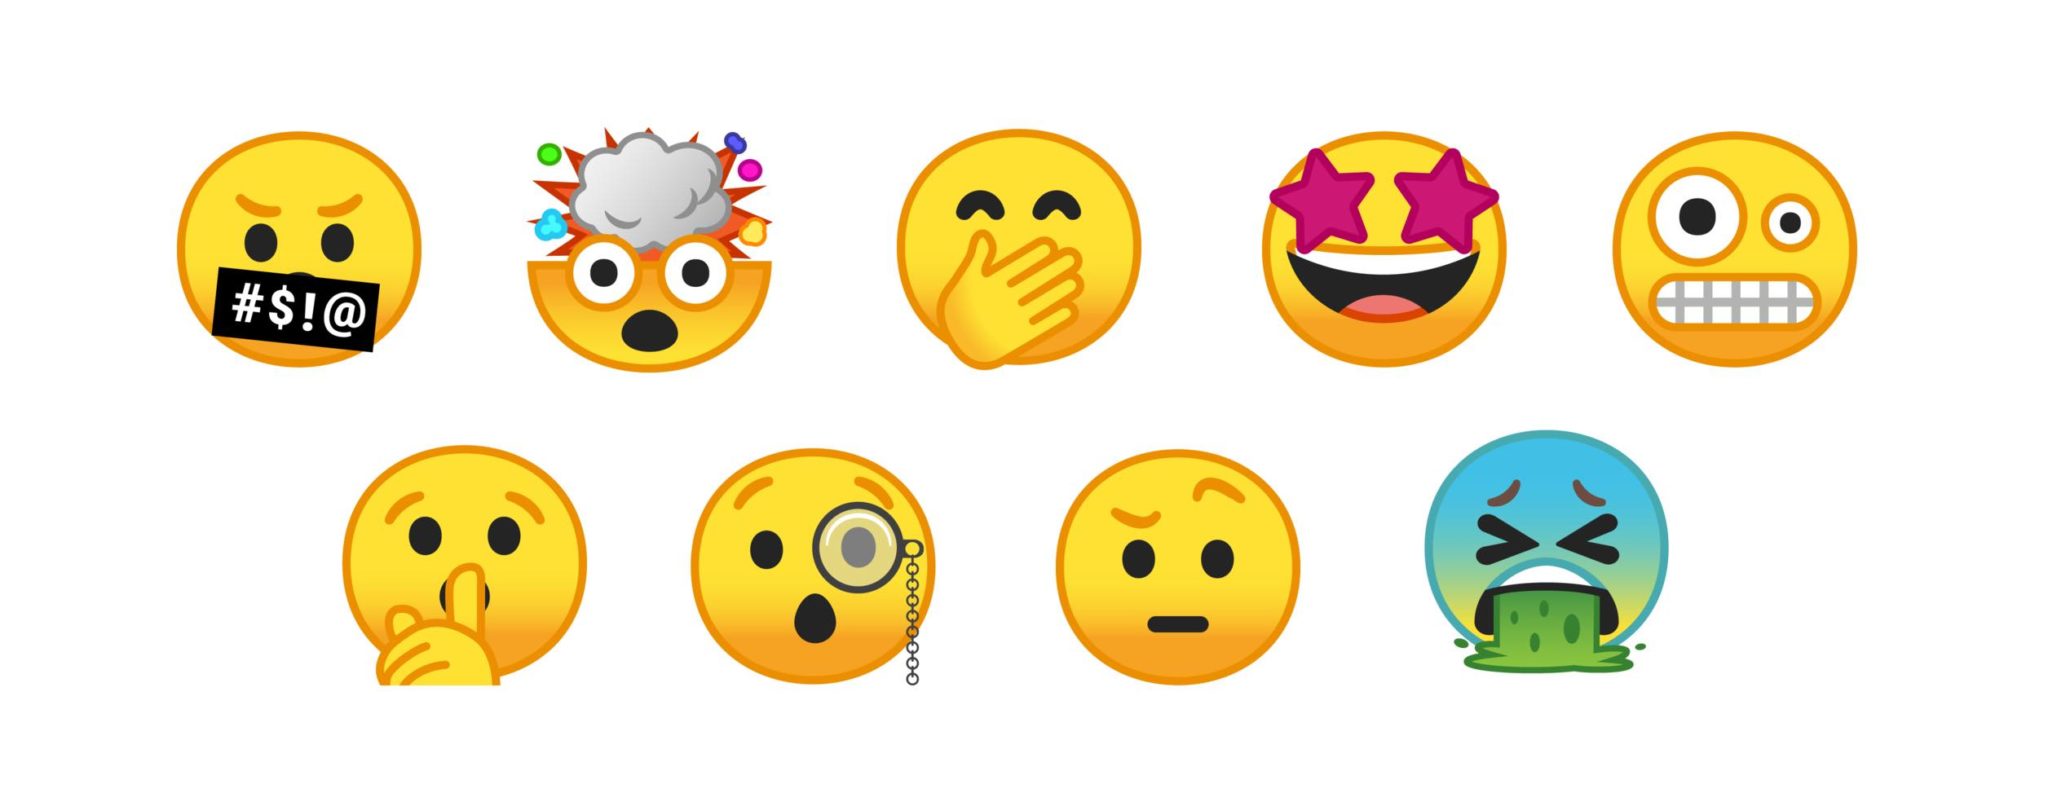 new emojis android o